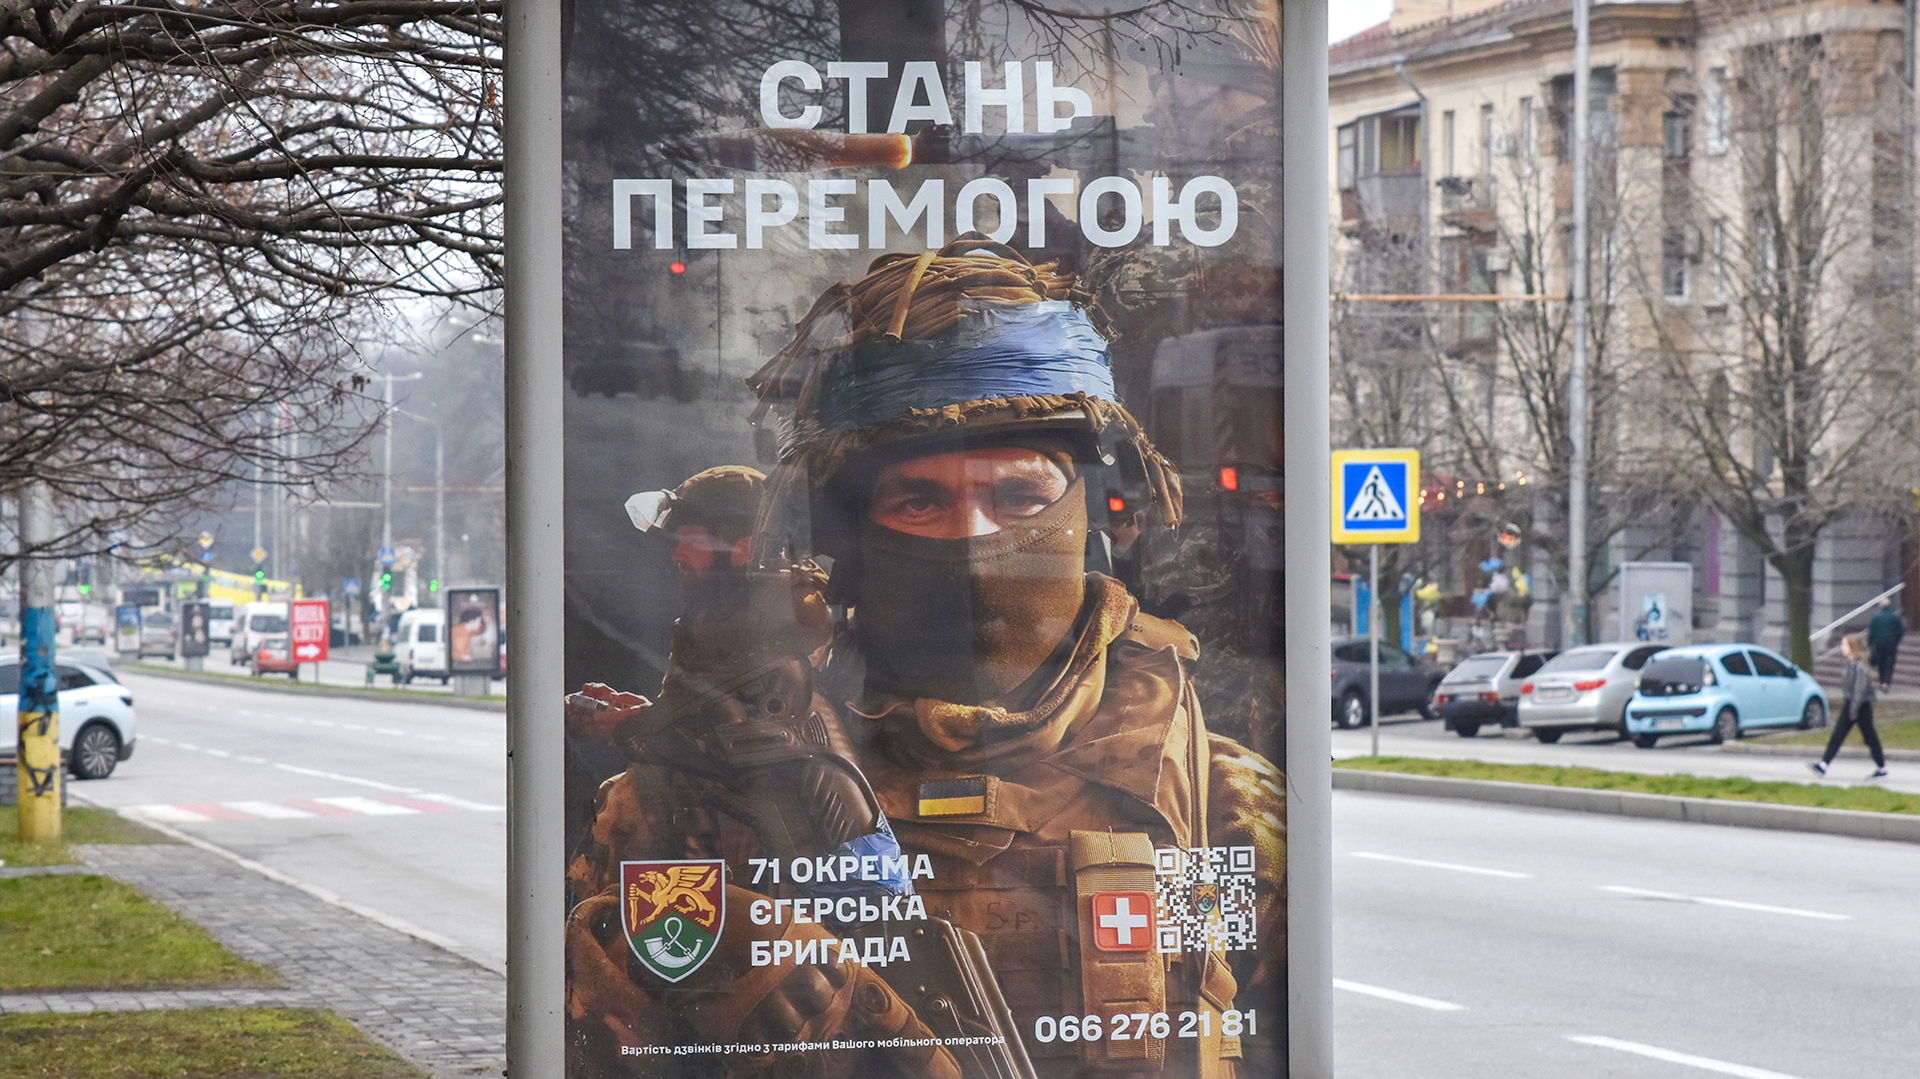 Ucranianos desprezam os oficiais de recrutamento, segundo alto comando militar